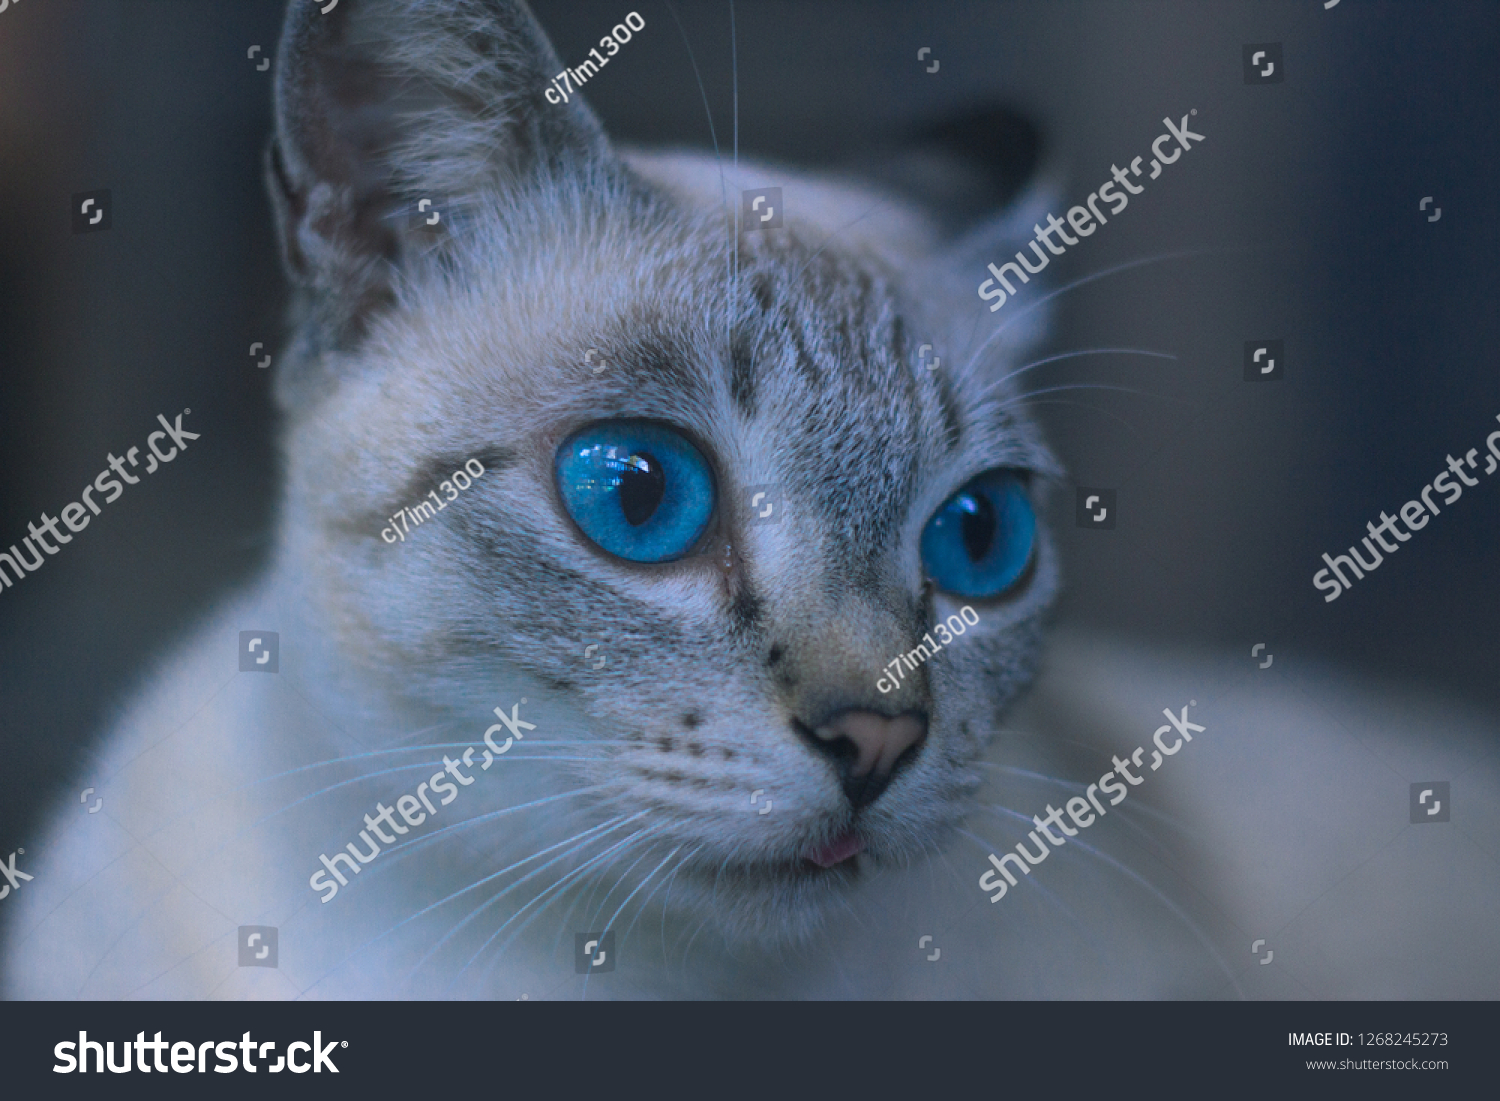 Little Ocean Eyes Cat Stock Image Download Now